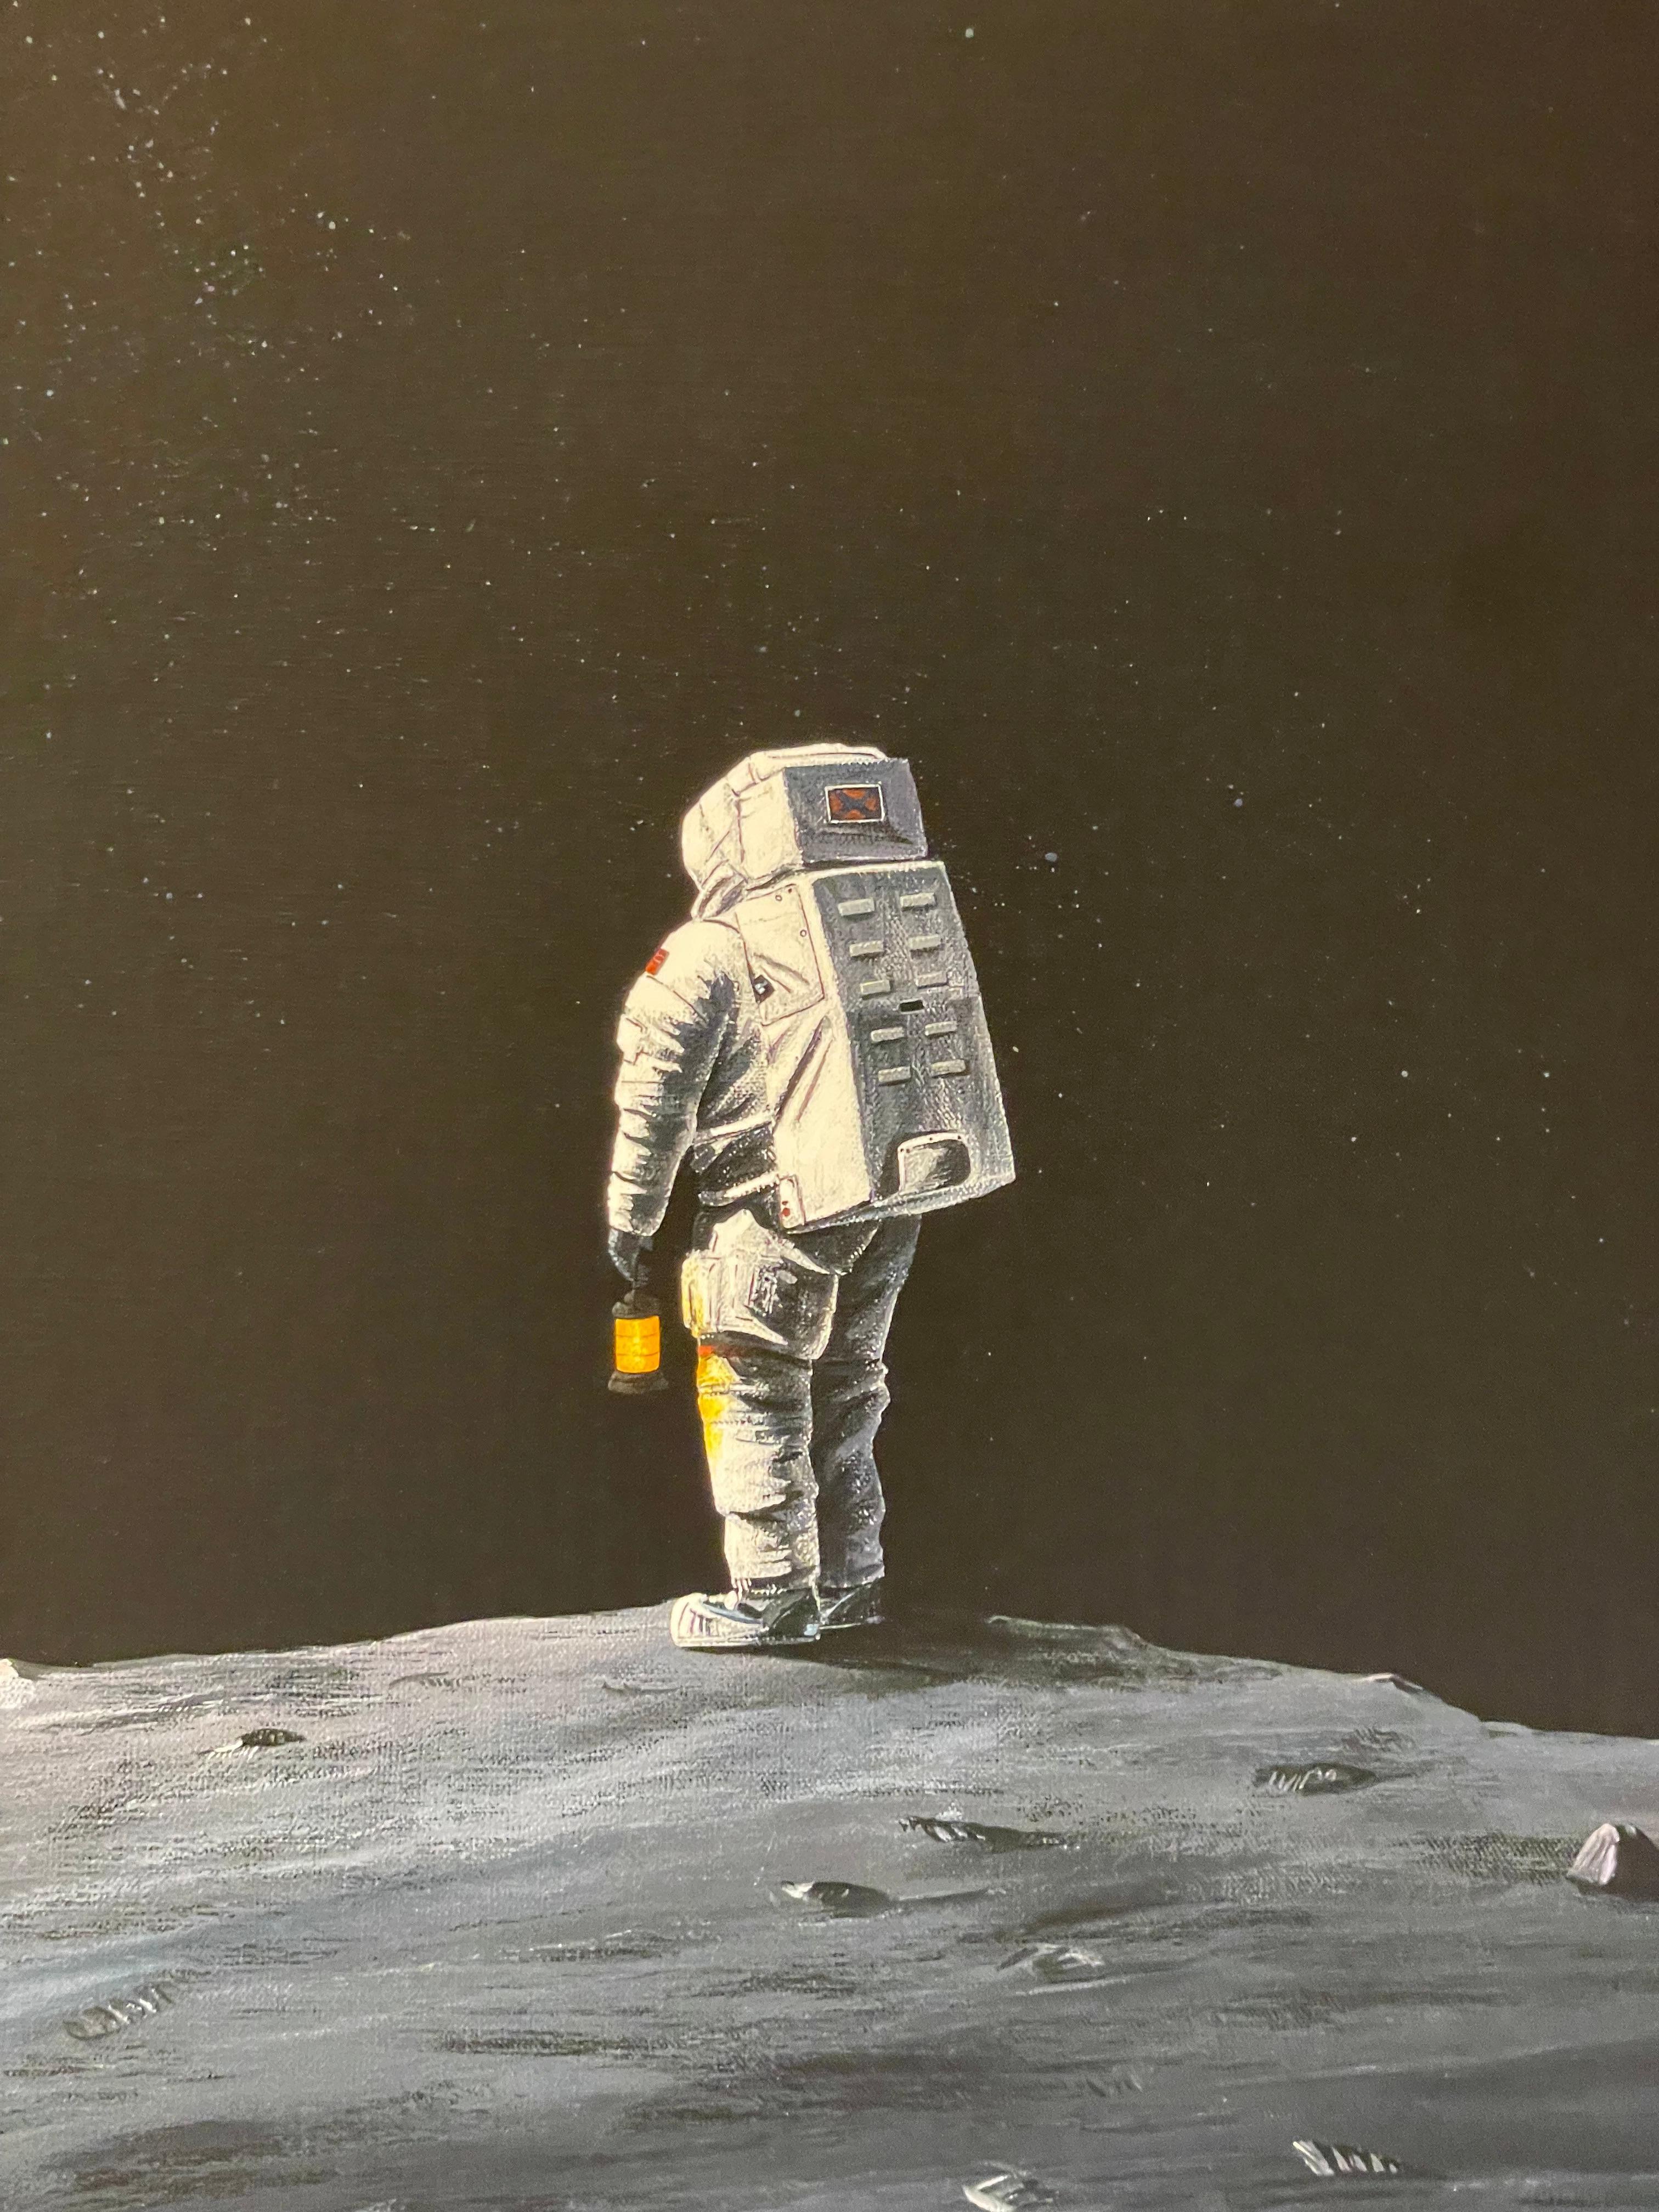 Série d'astronauts contemporains « A Beacon » de Jing Zhiyong - Print de Zhiyong Jing